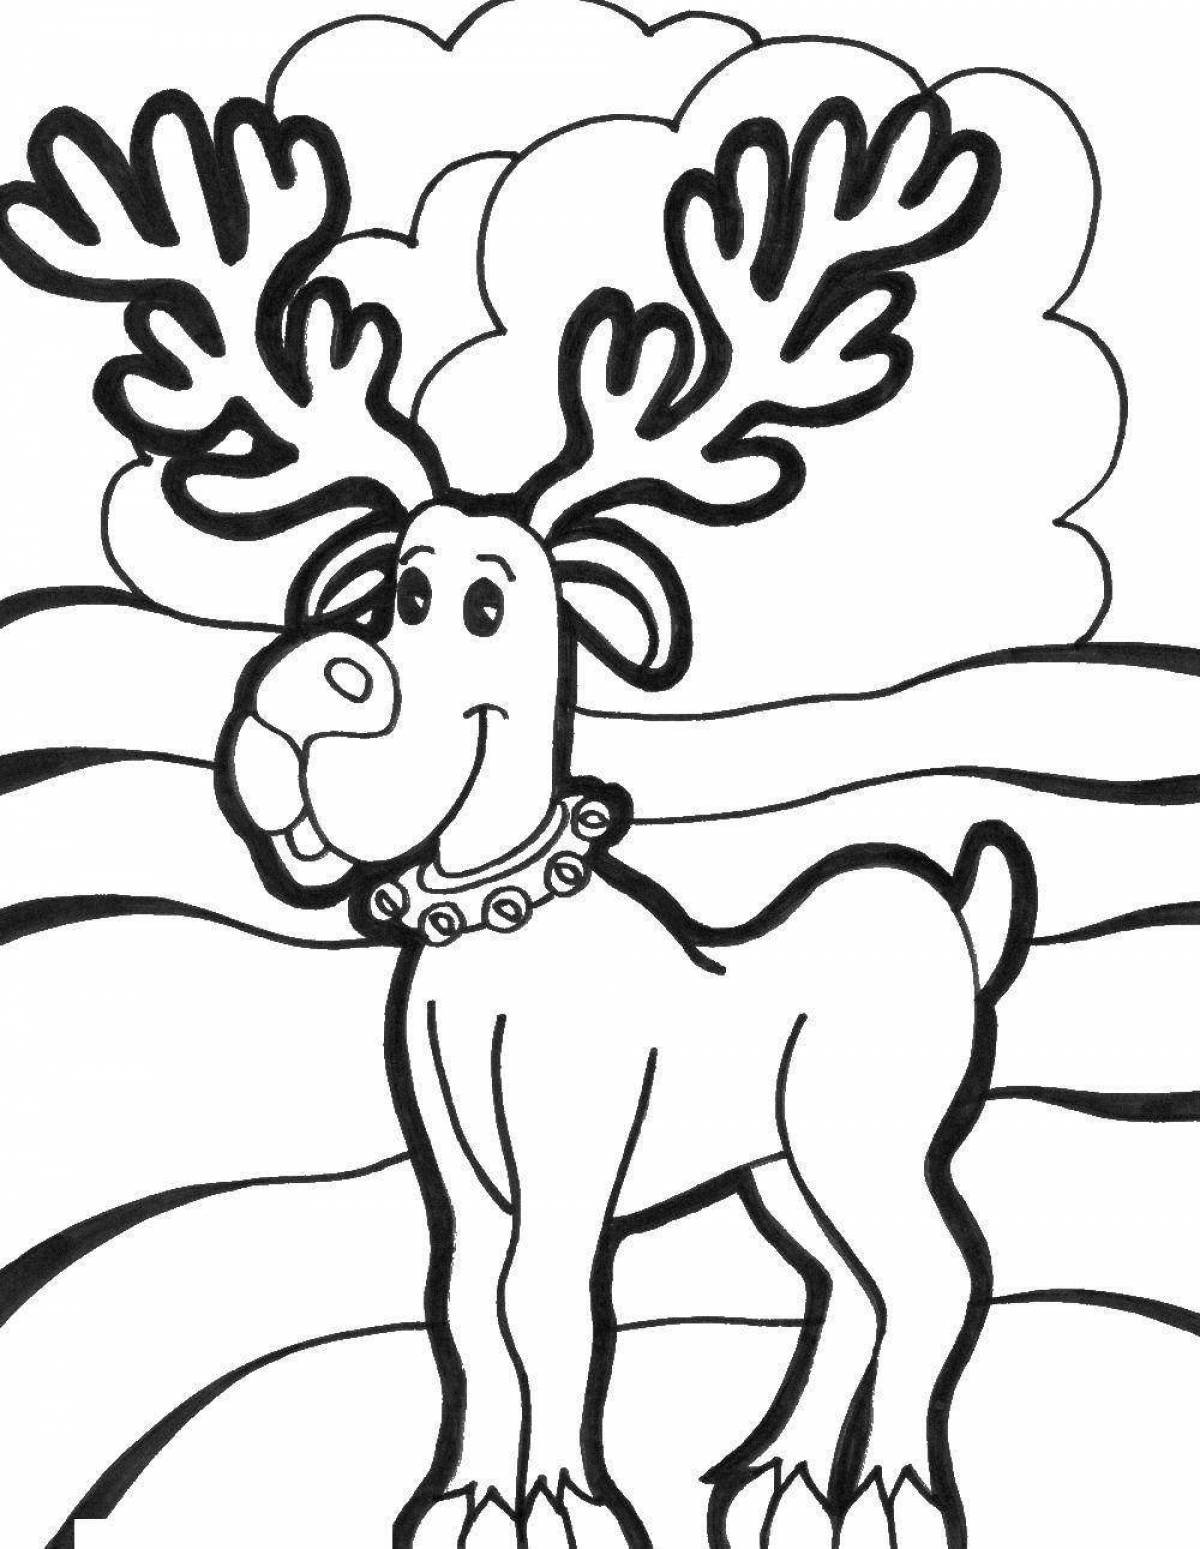 Children's shining Christmas deer coloring book